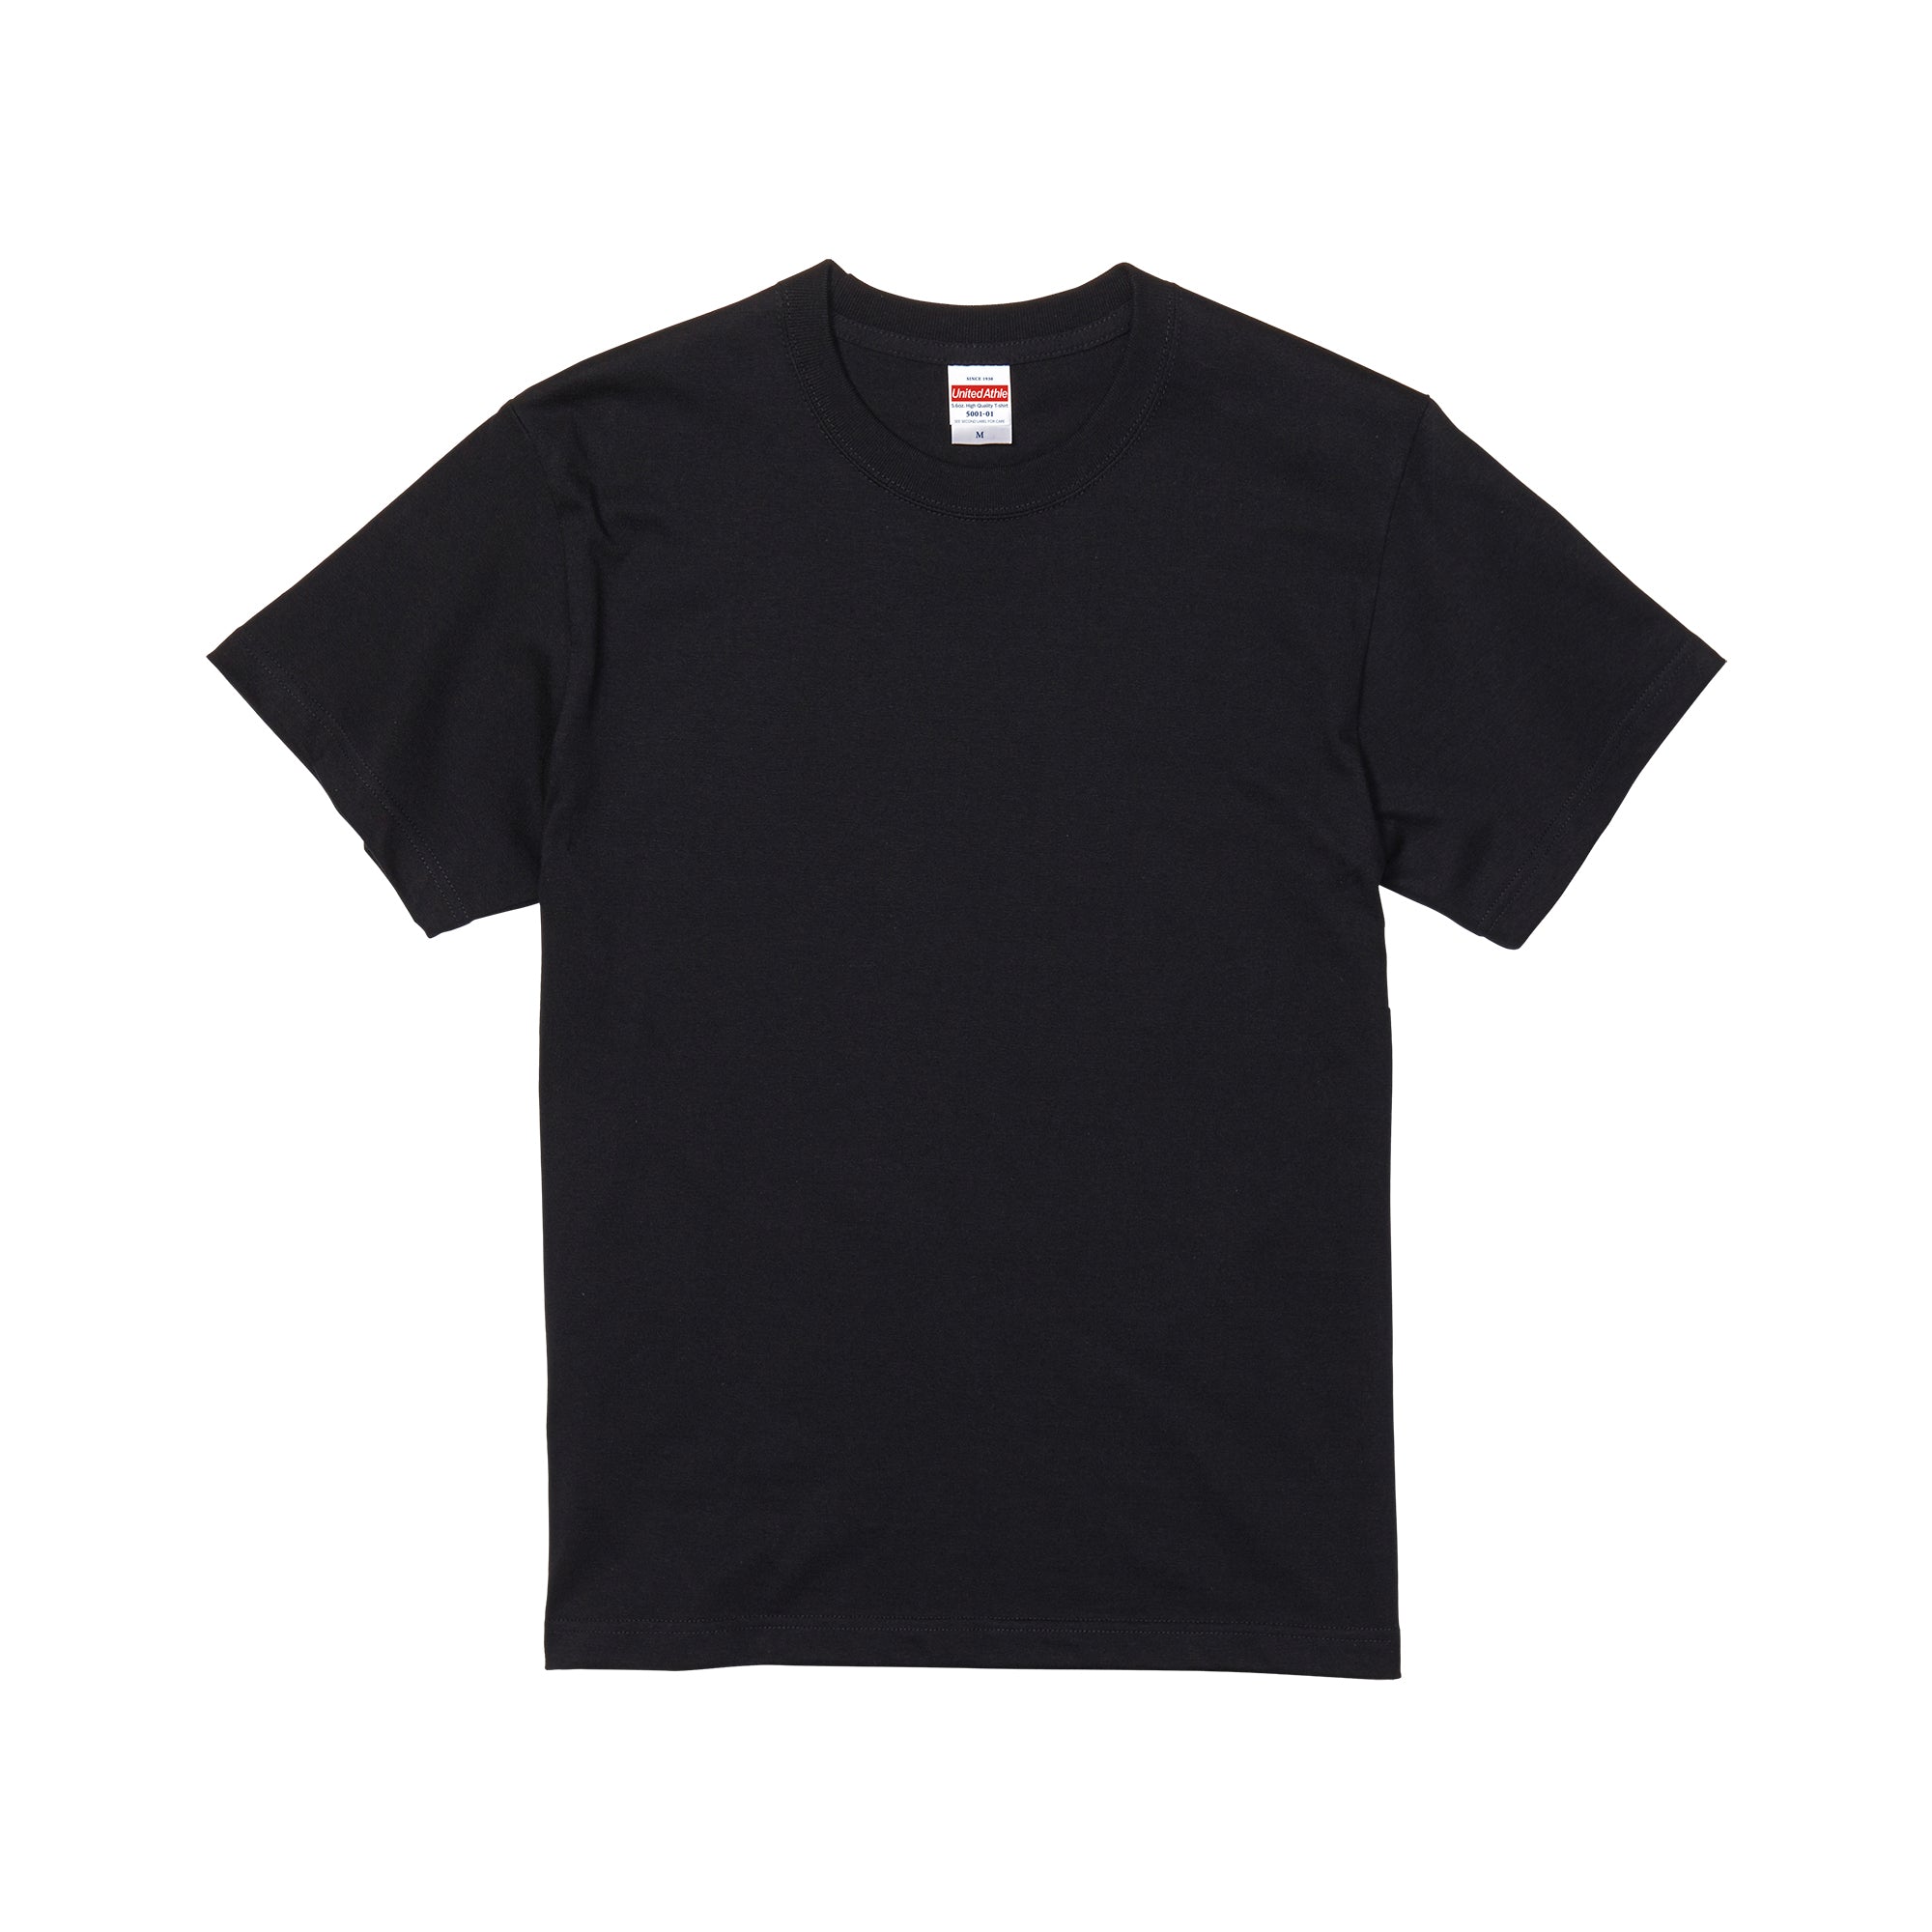 5001 - Classic Fit 5.6oz T-shirt - Black